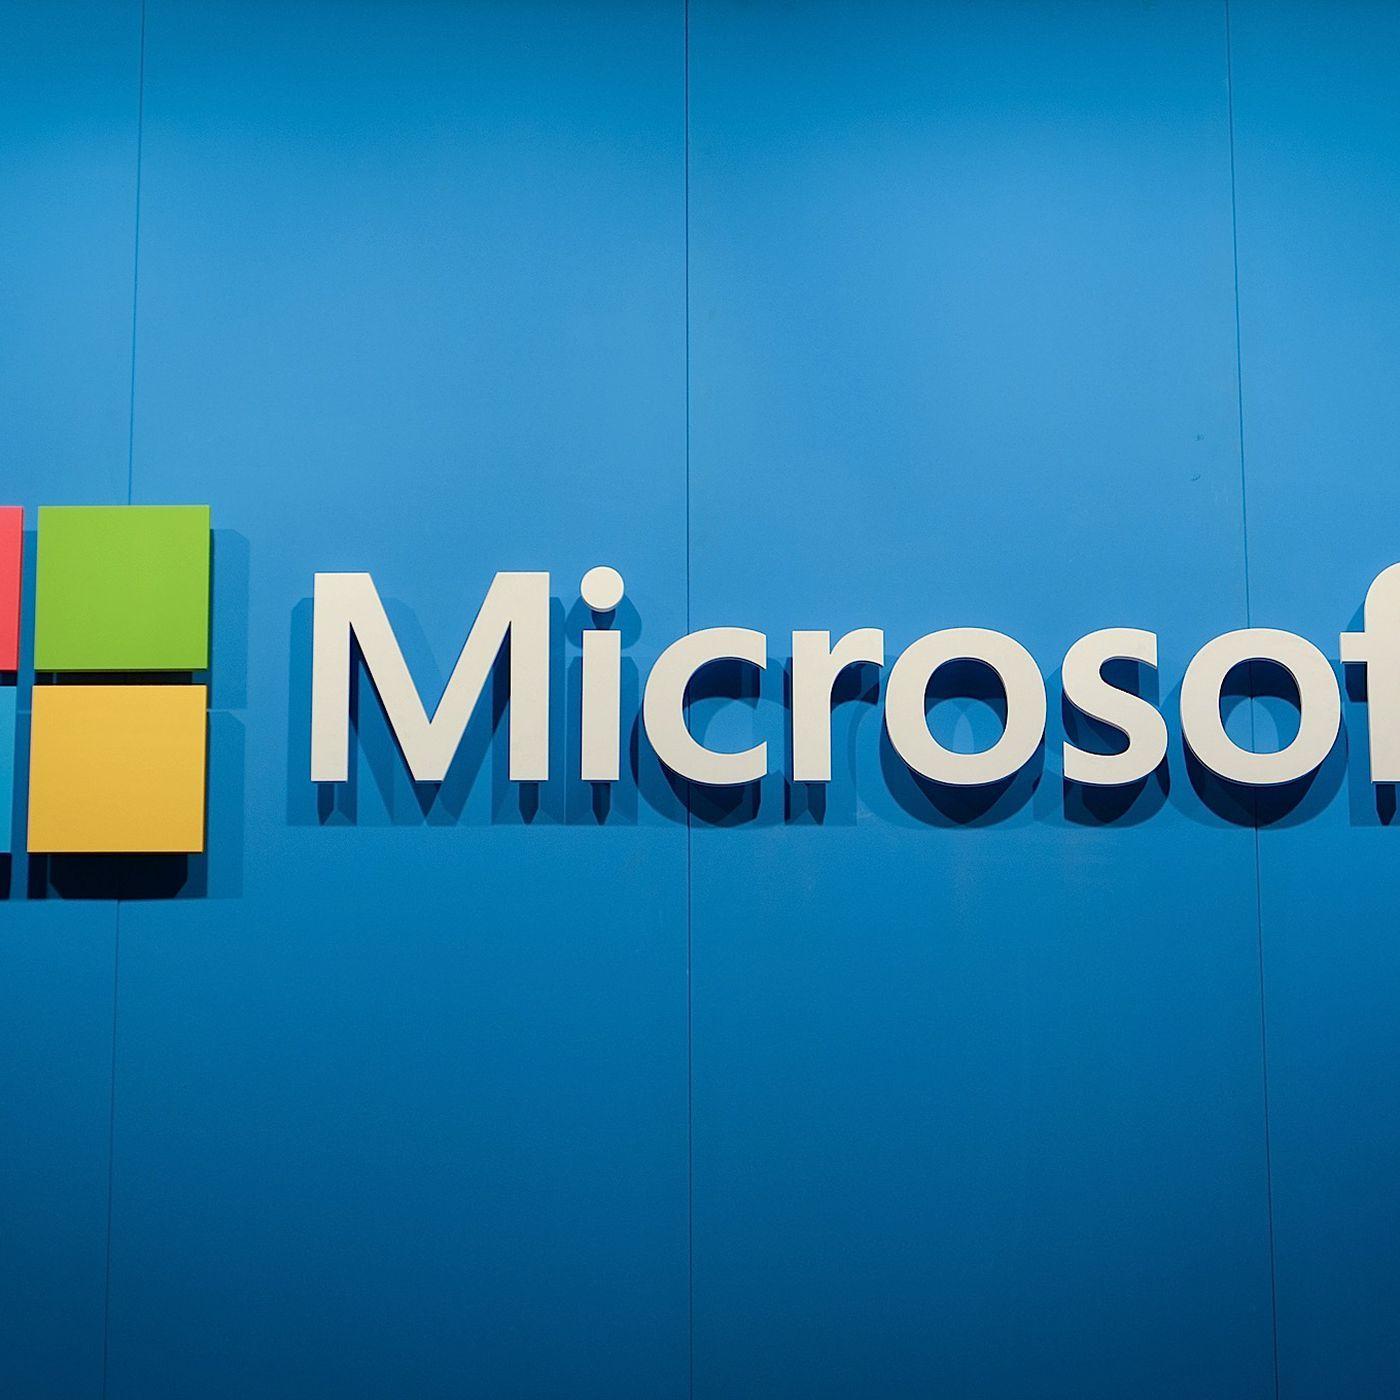 Windows Store Logo - Windows Store rebranded to Microsoft Store in Windows 10 - The Verge